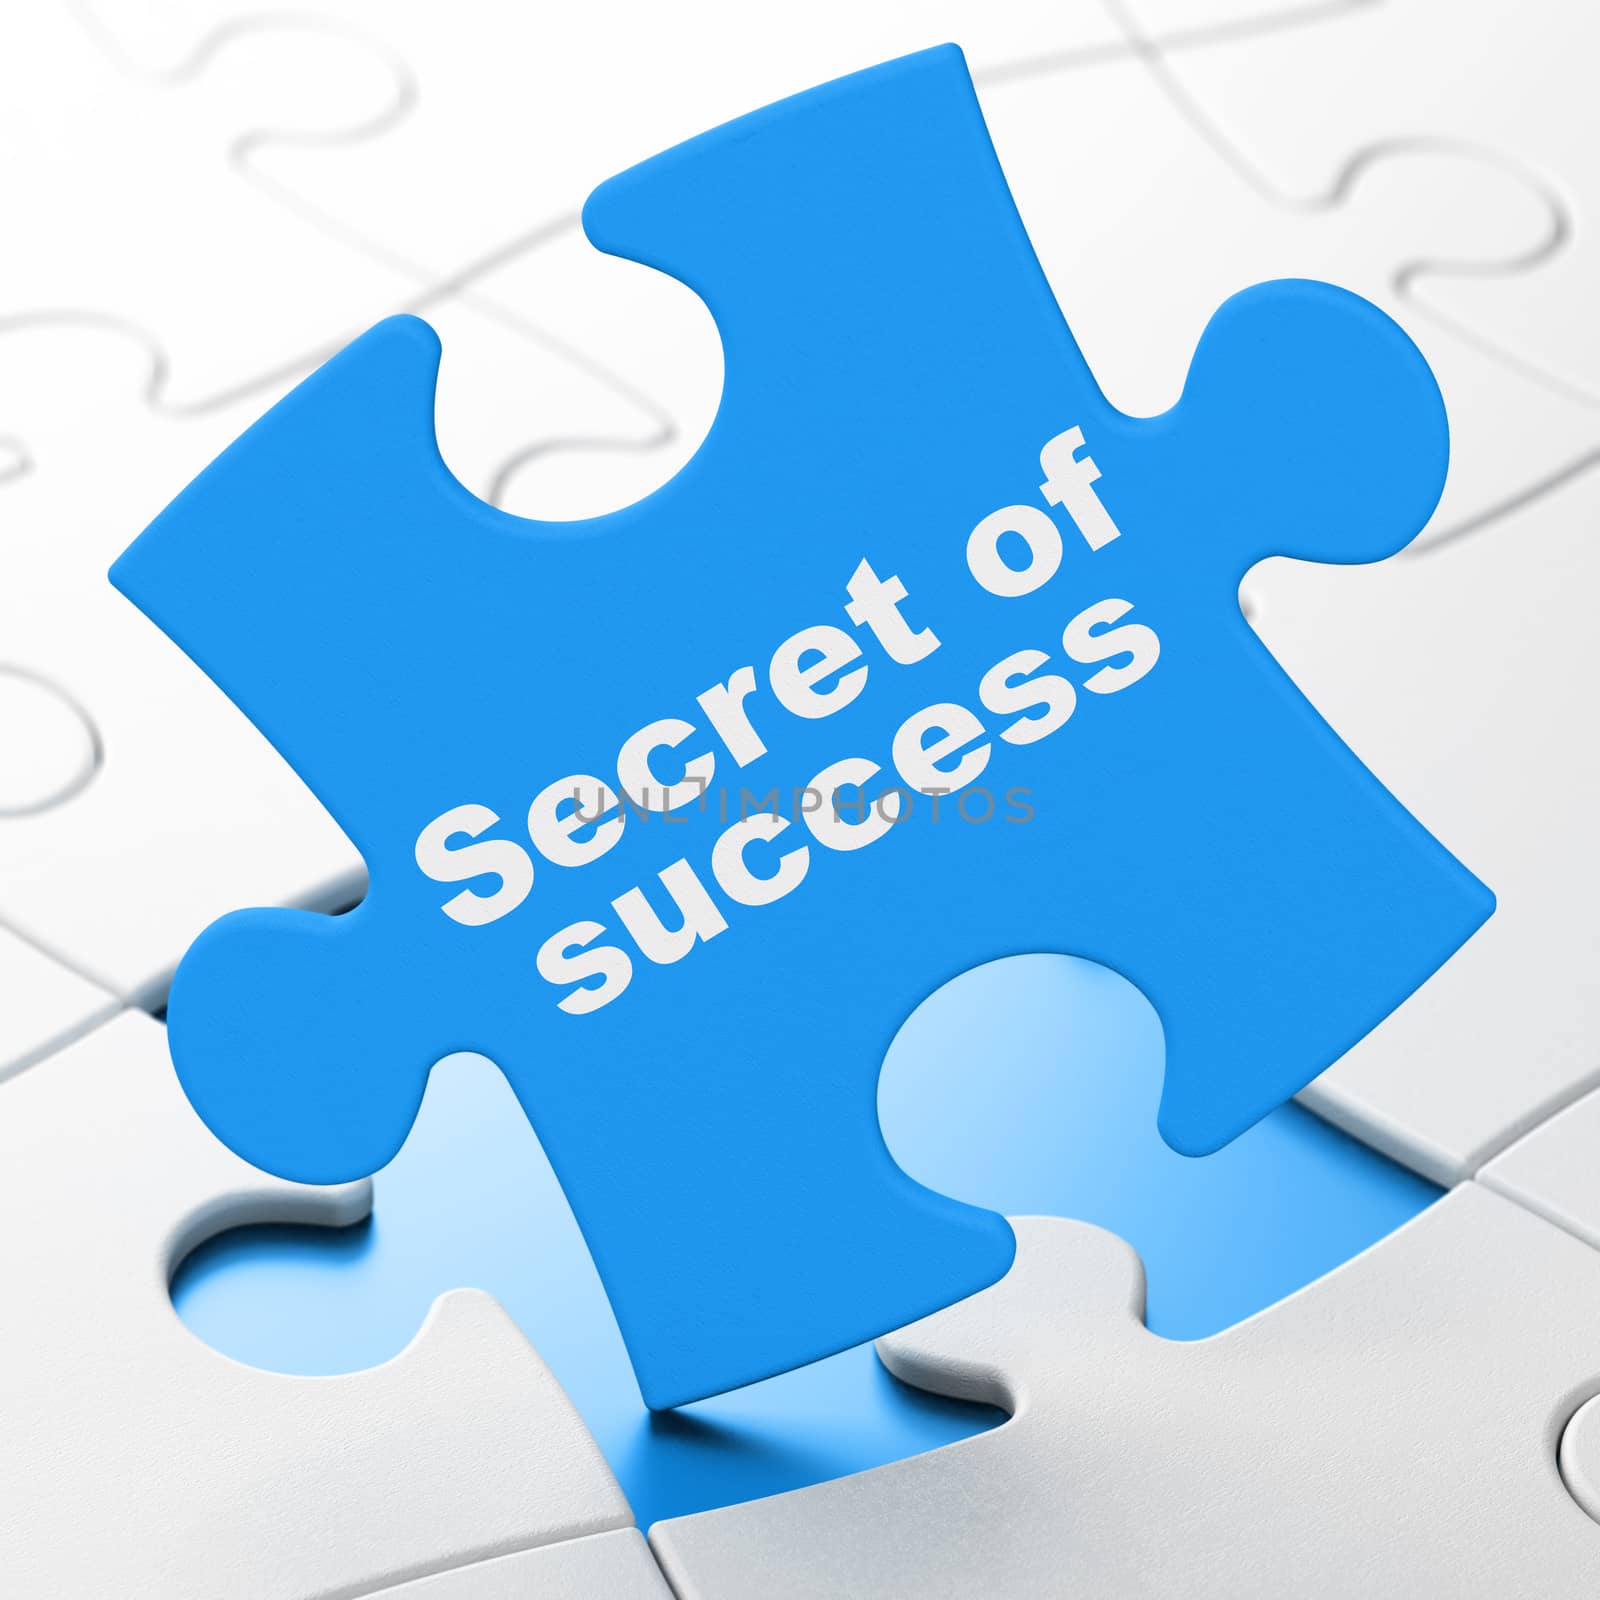 Finance concept: Secret of Success on puzzle background by maxkabakov